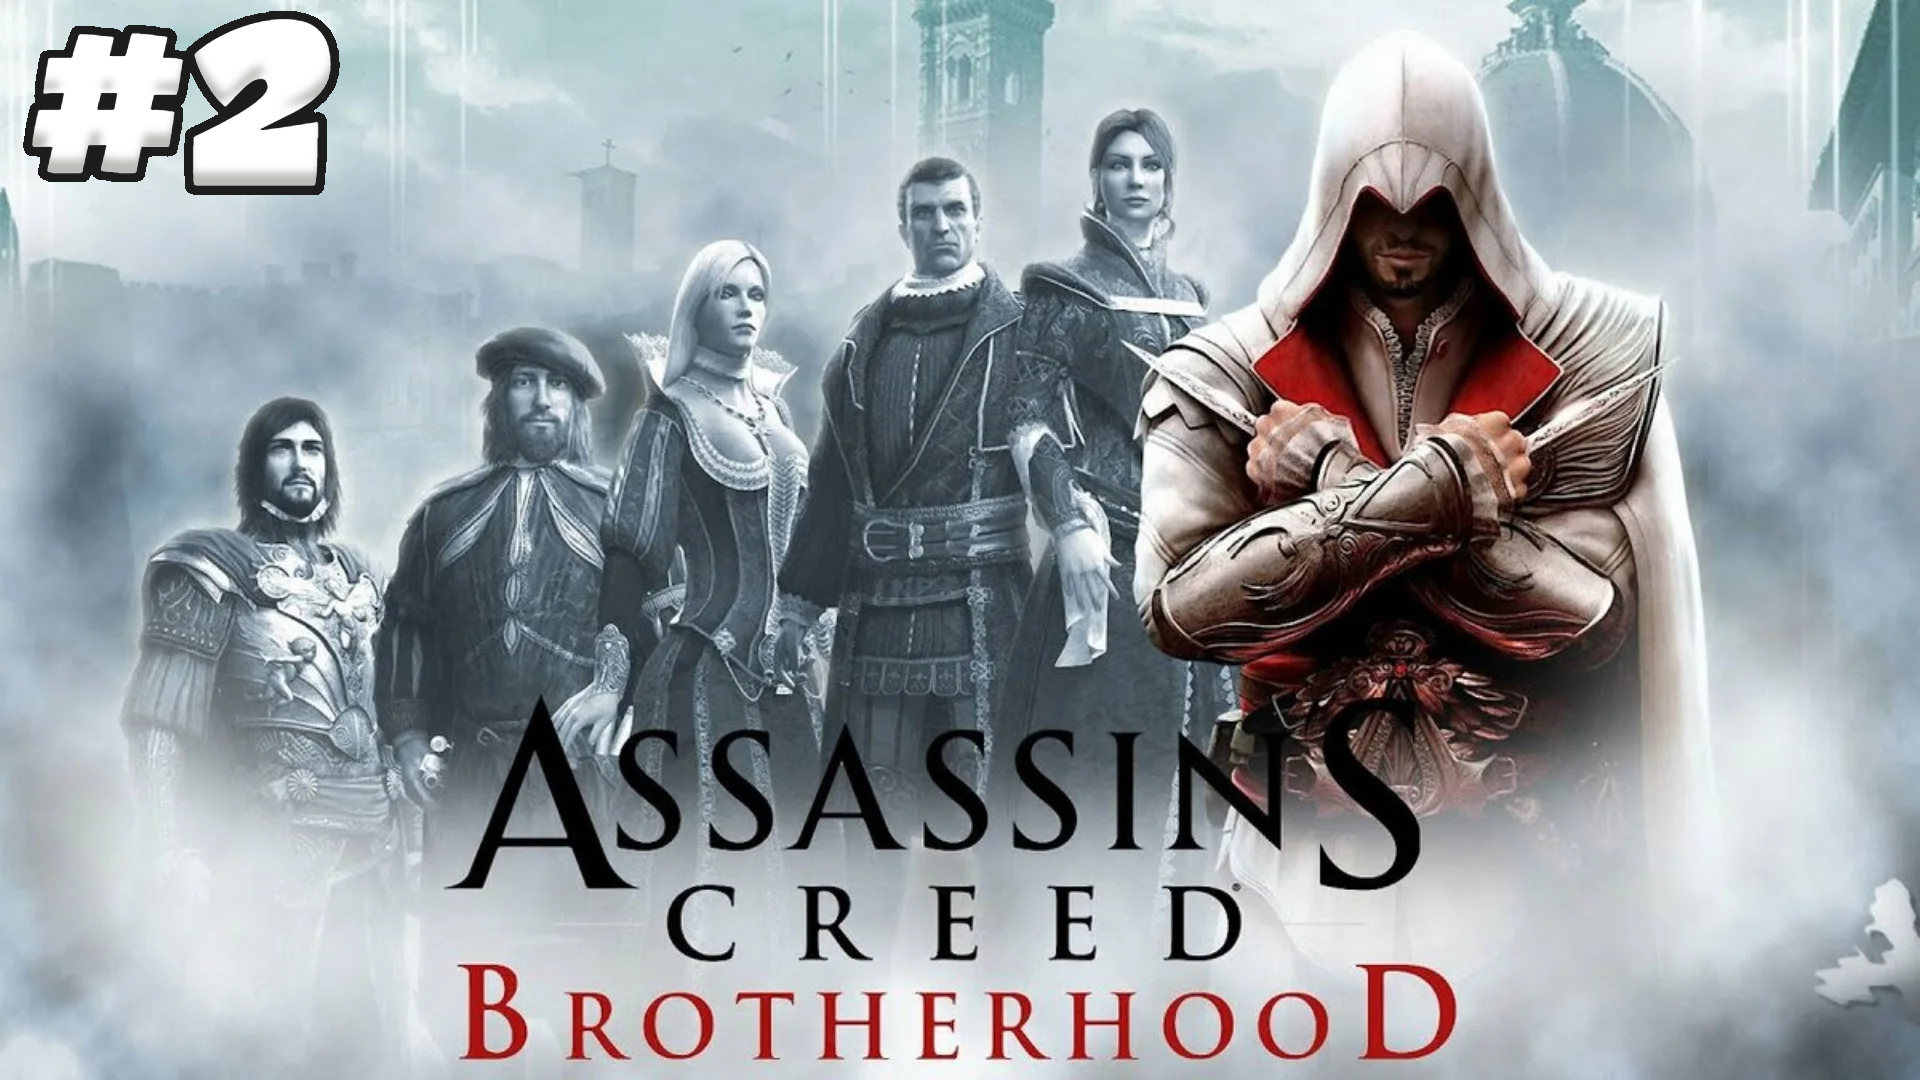 Игра assassin creed brotherhood. Assassin's Creed. Братство. Ассасин Крид 2 братство крови обложка. Братство крови ассасин 3. Assassin's Creed 2 Brotherhood poster.